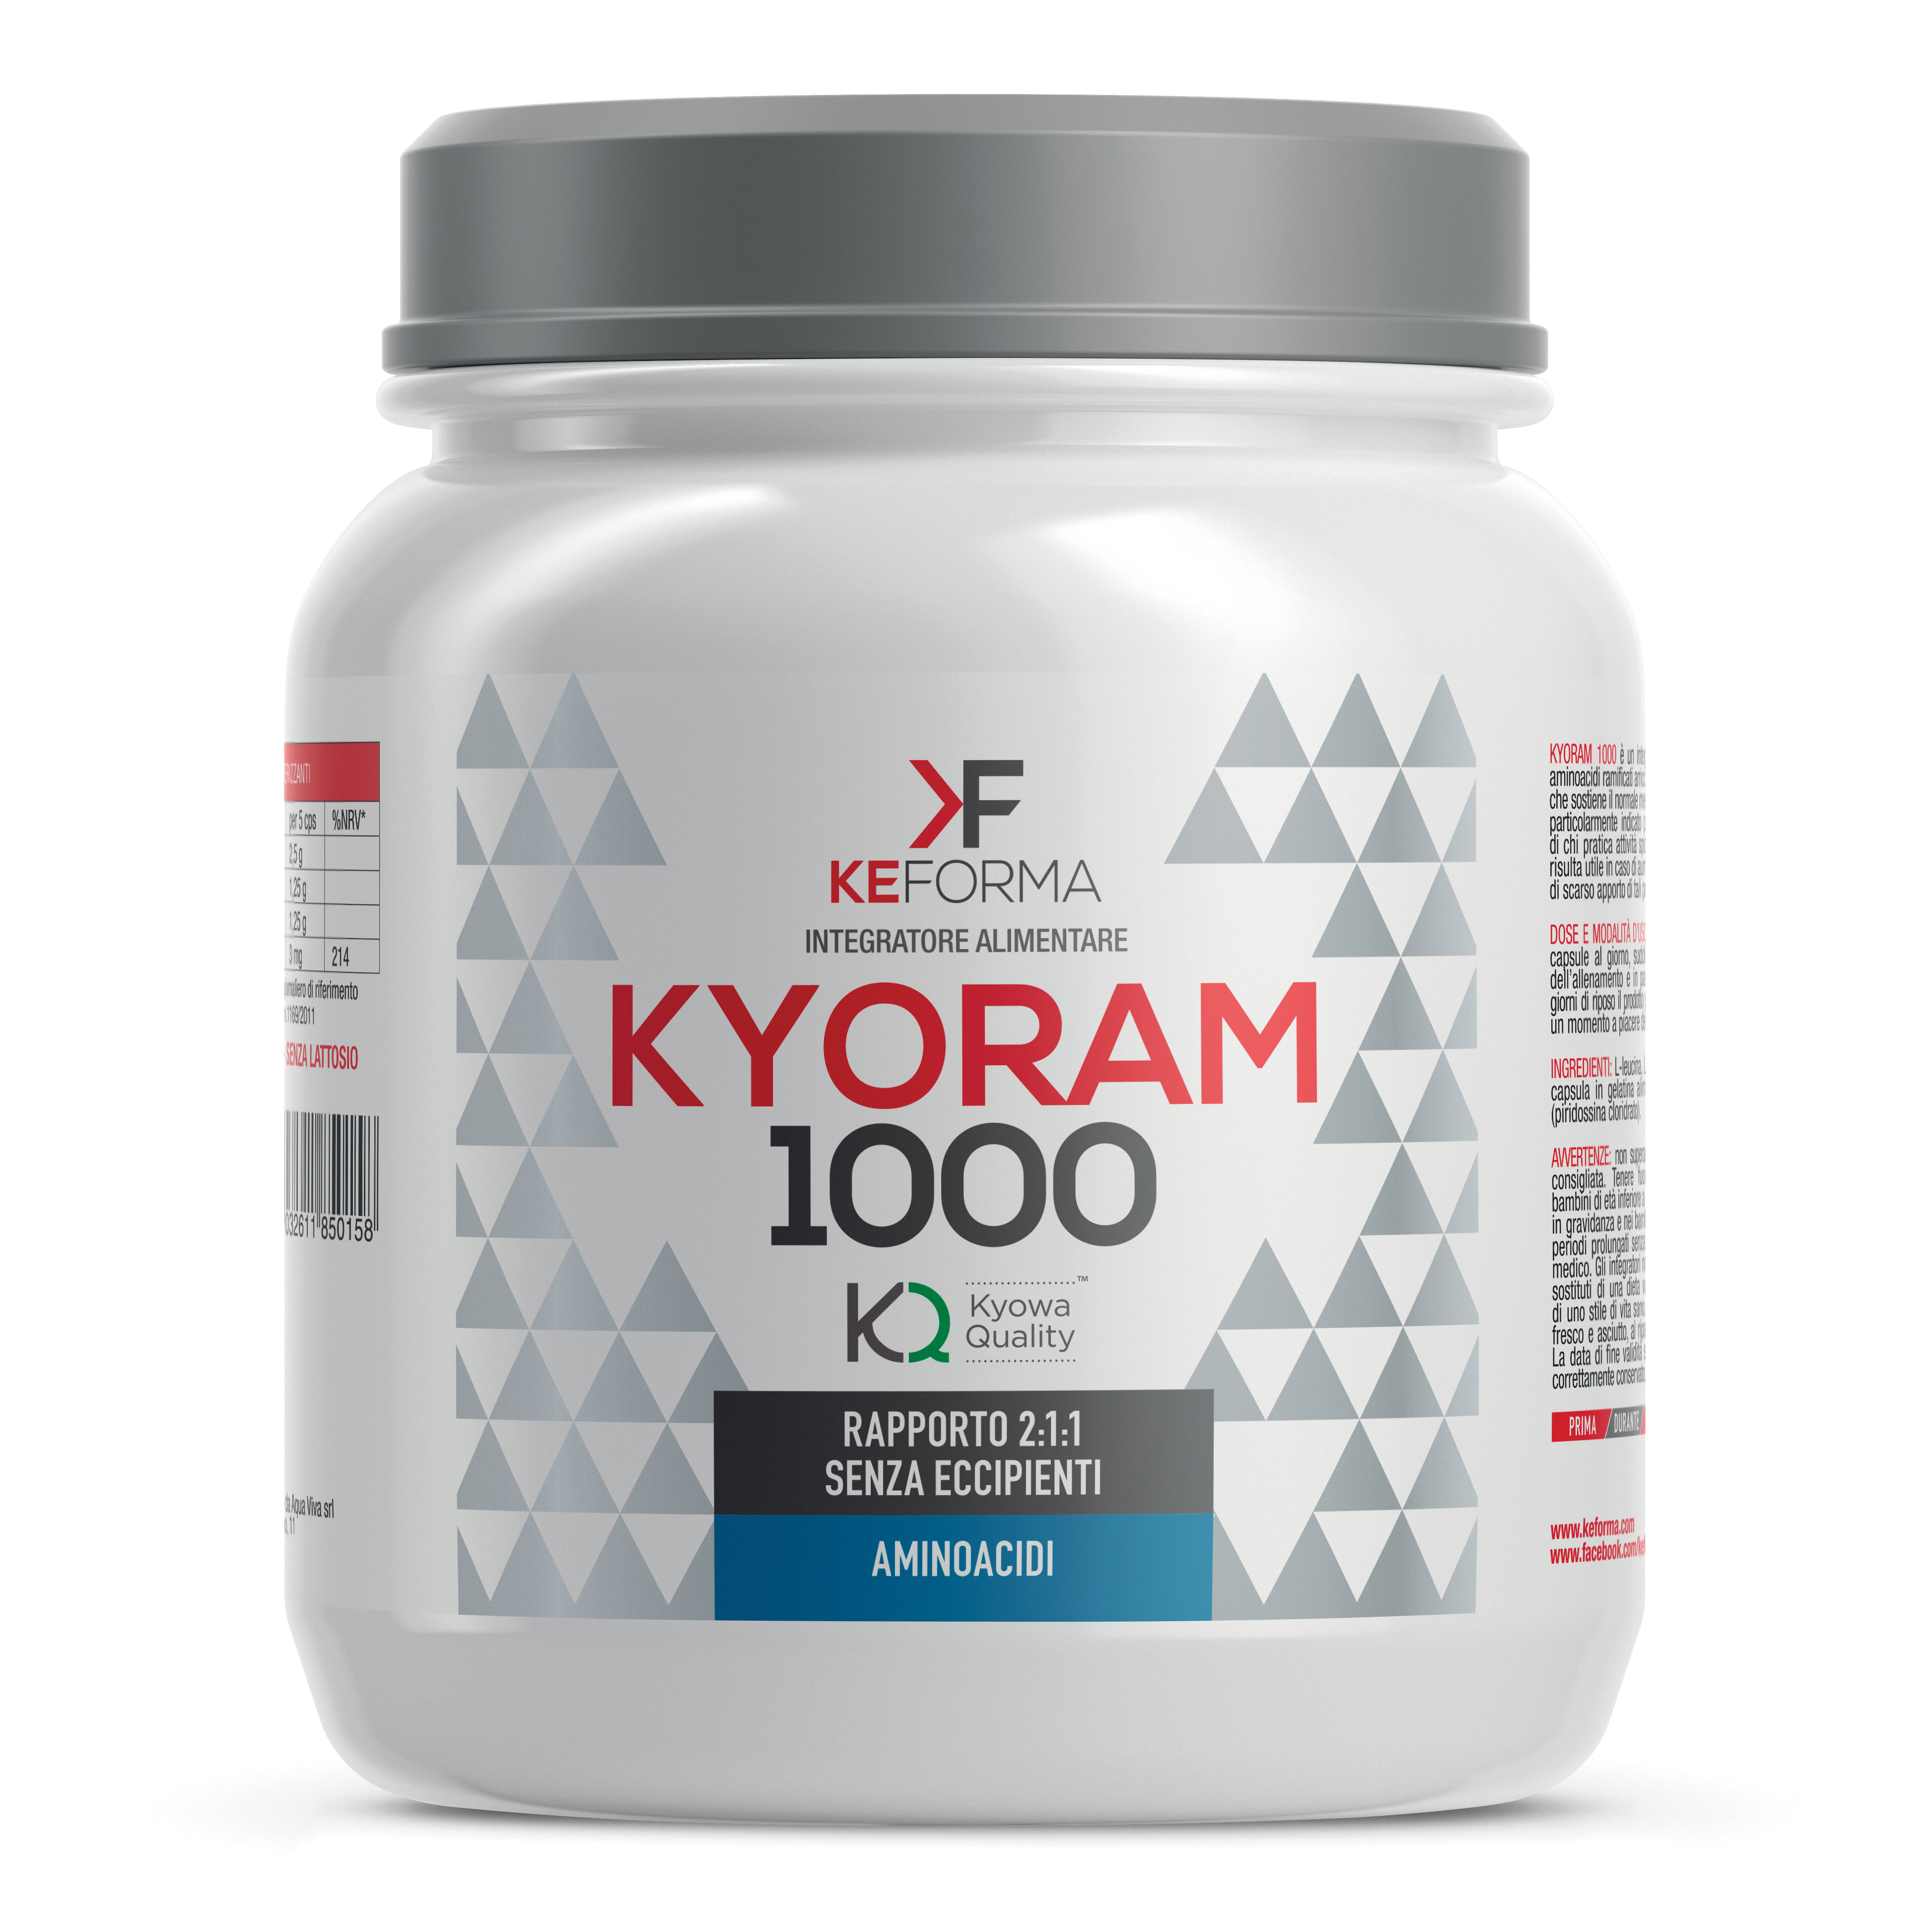 KYORAM 1000 300CPS